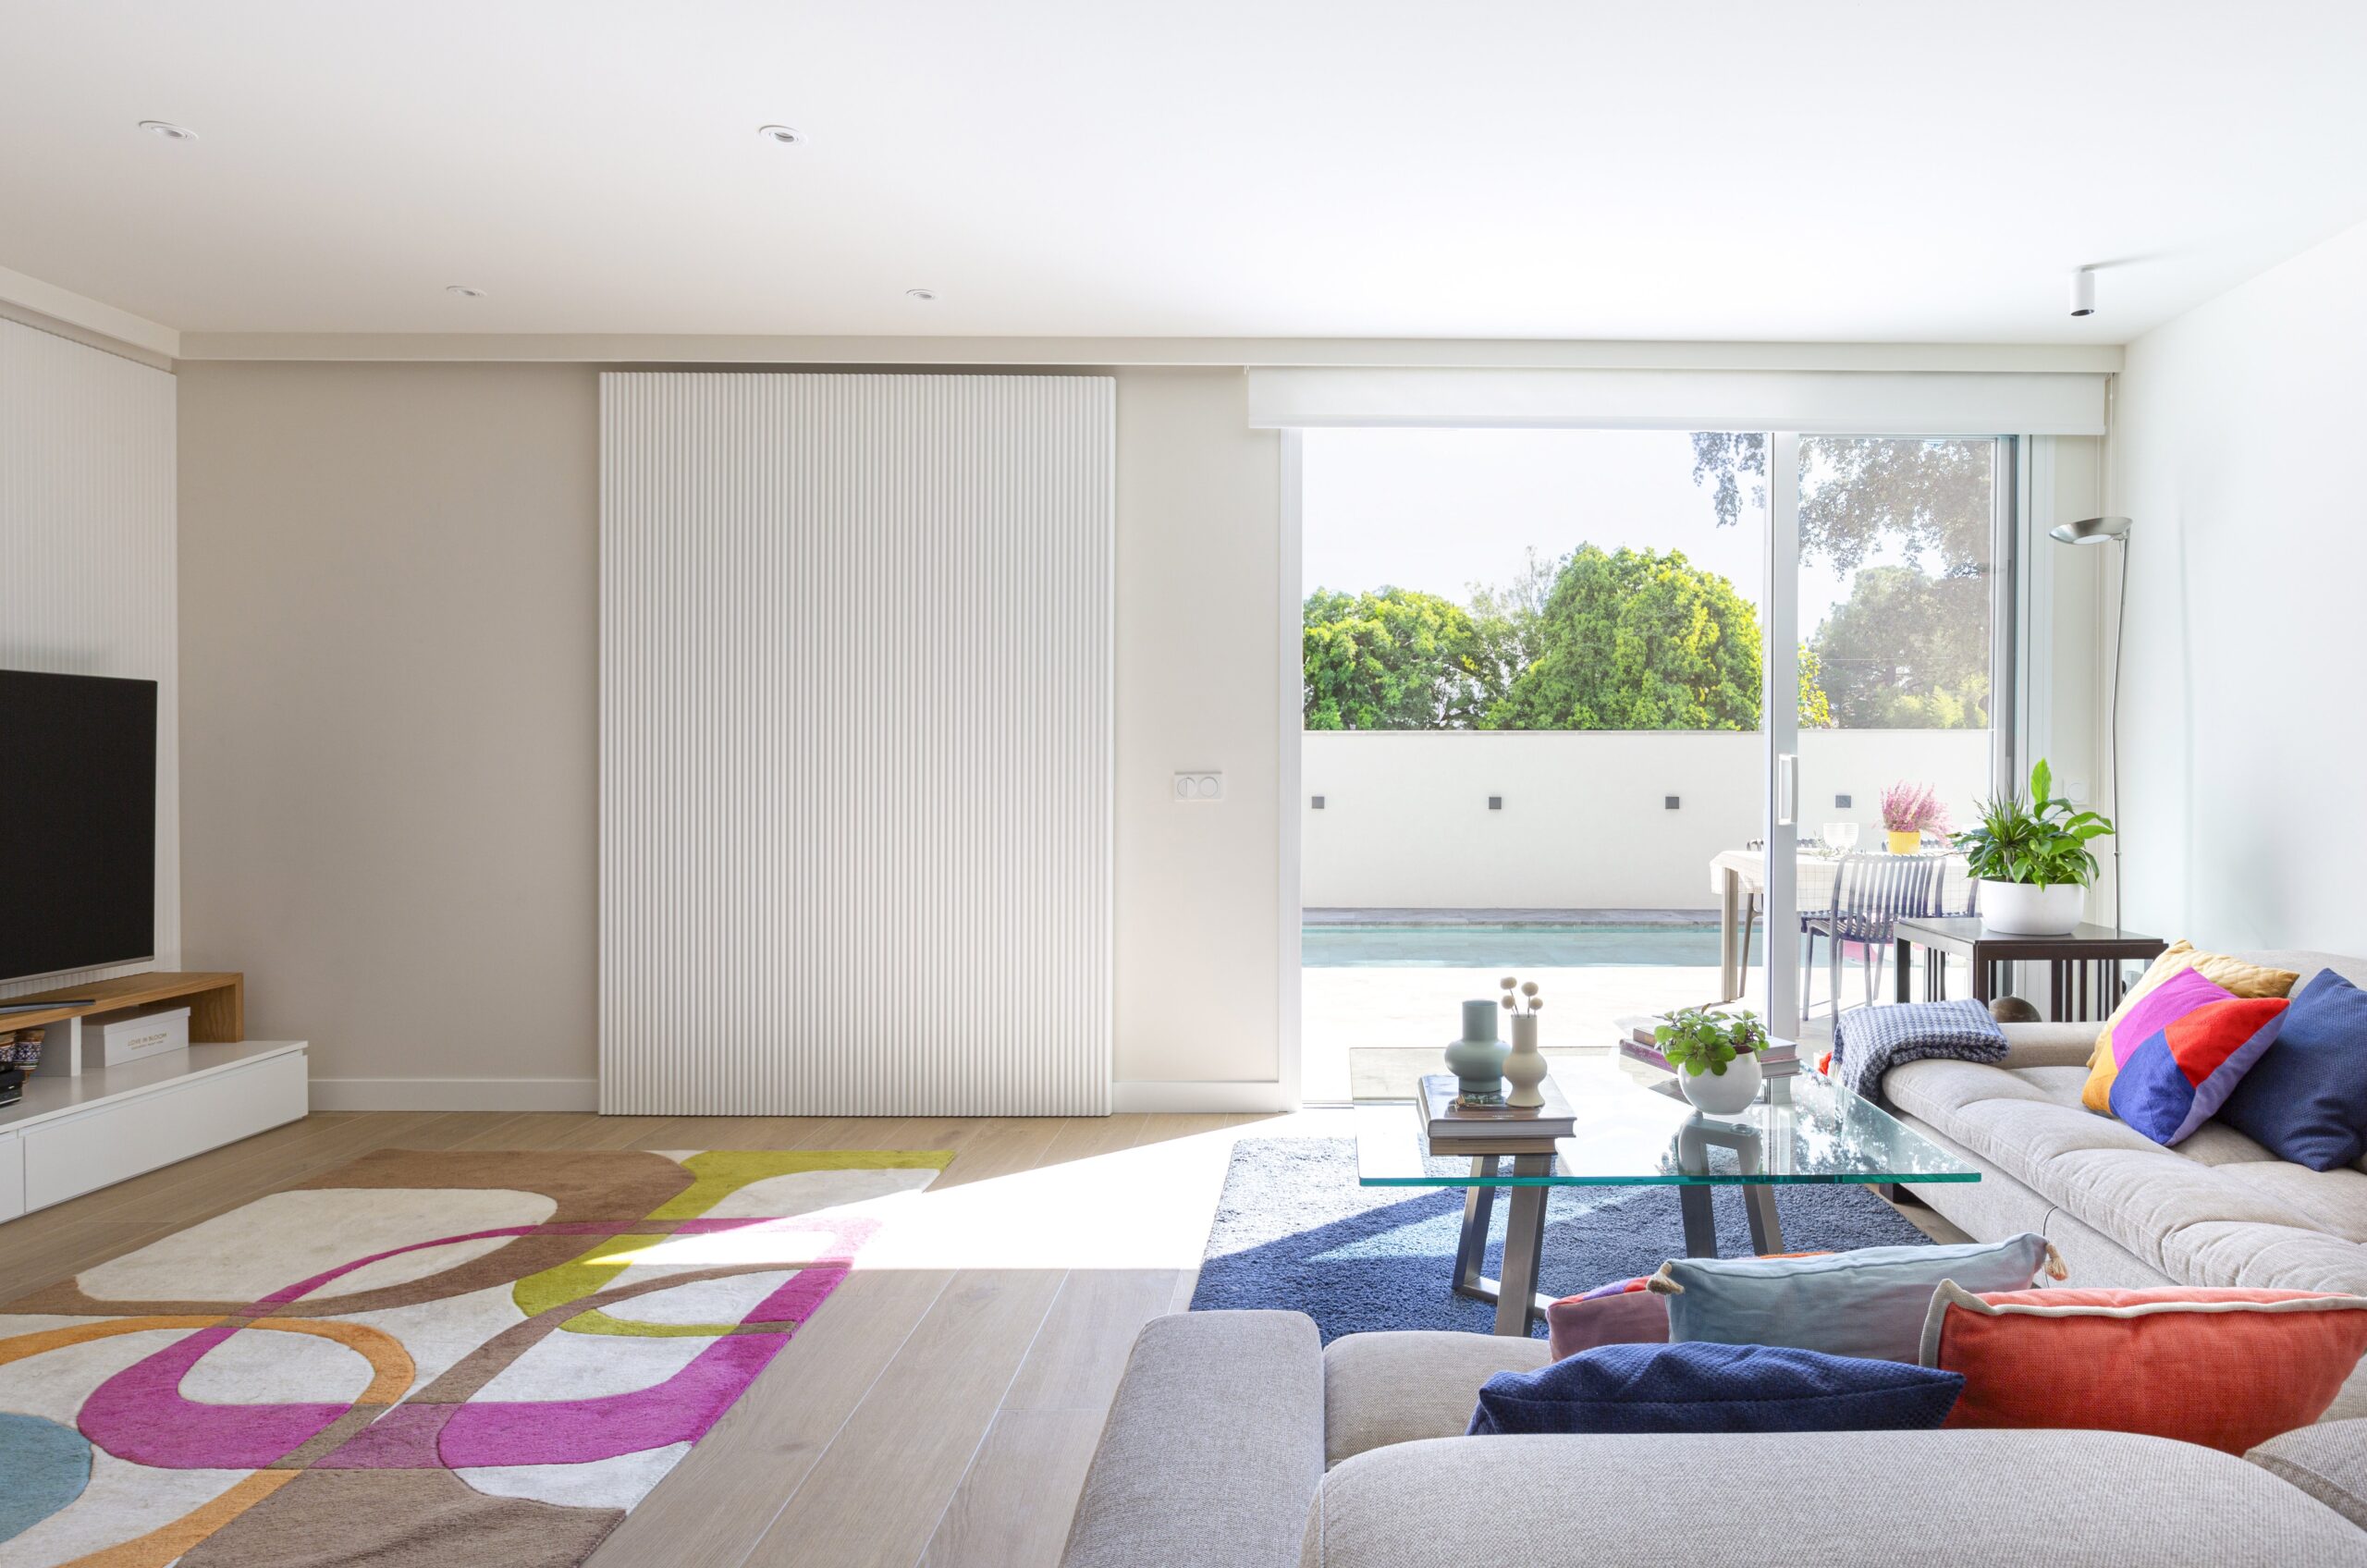 Reforma interior de casa moderna minimalista